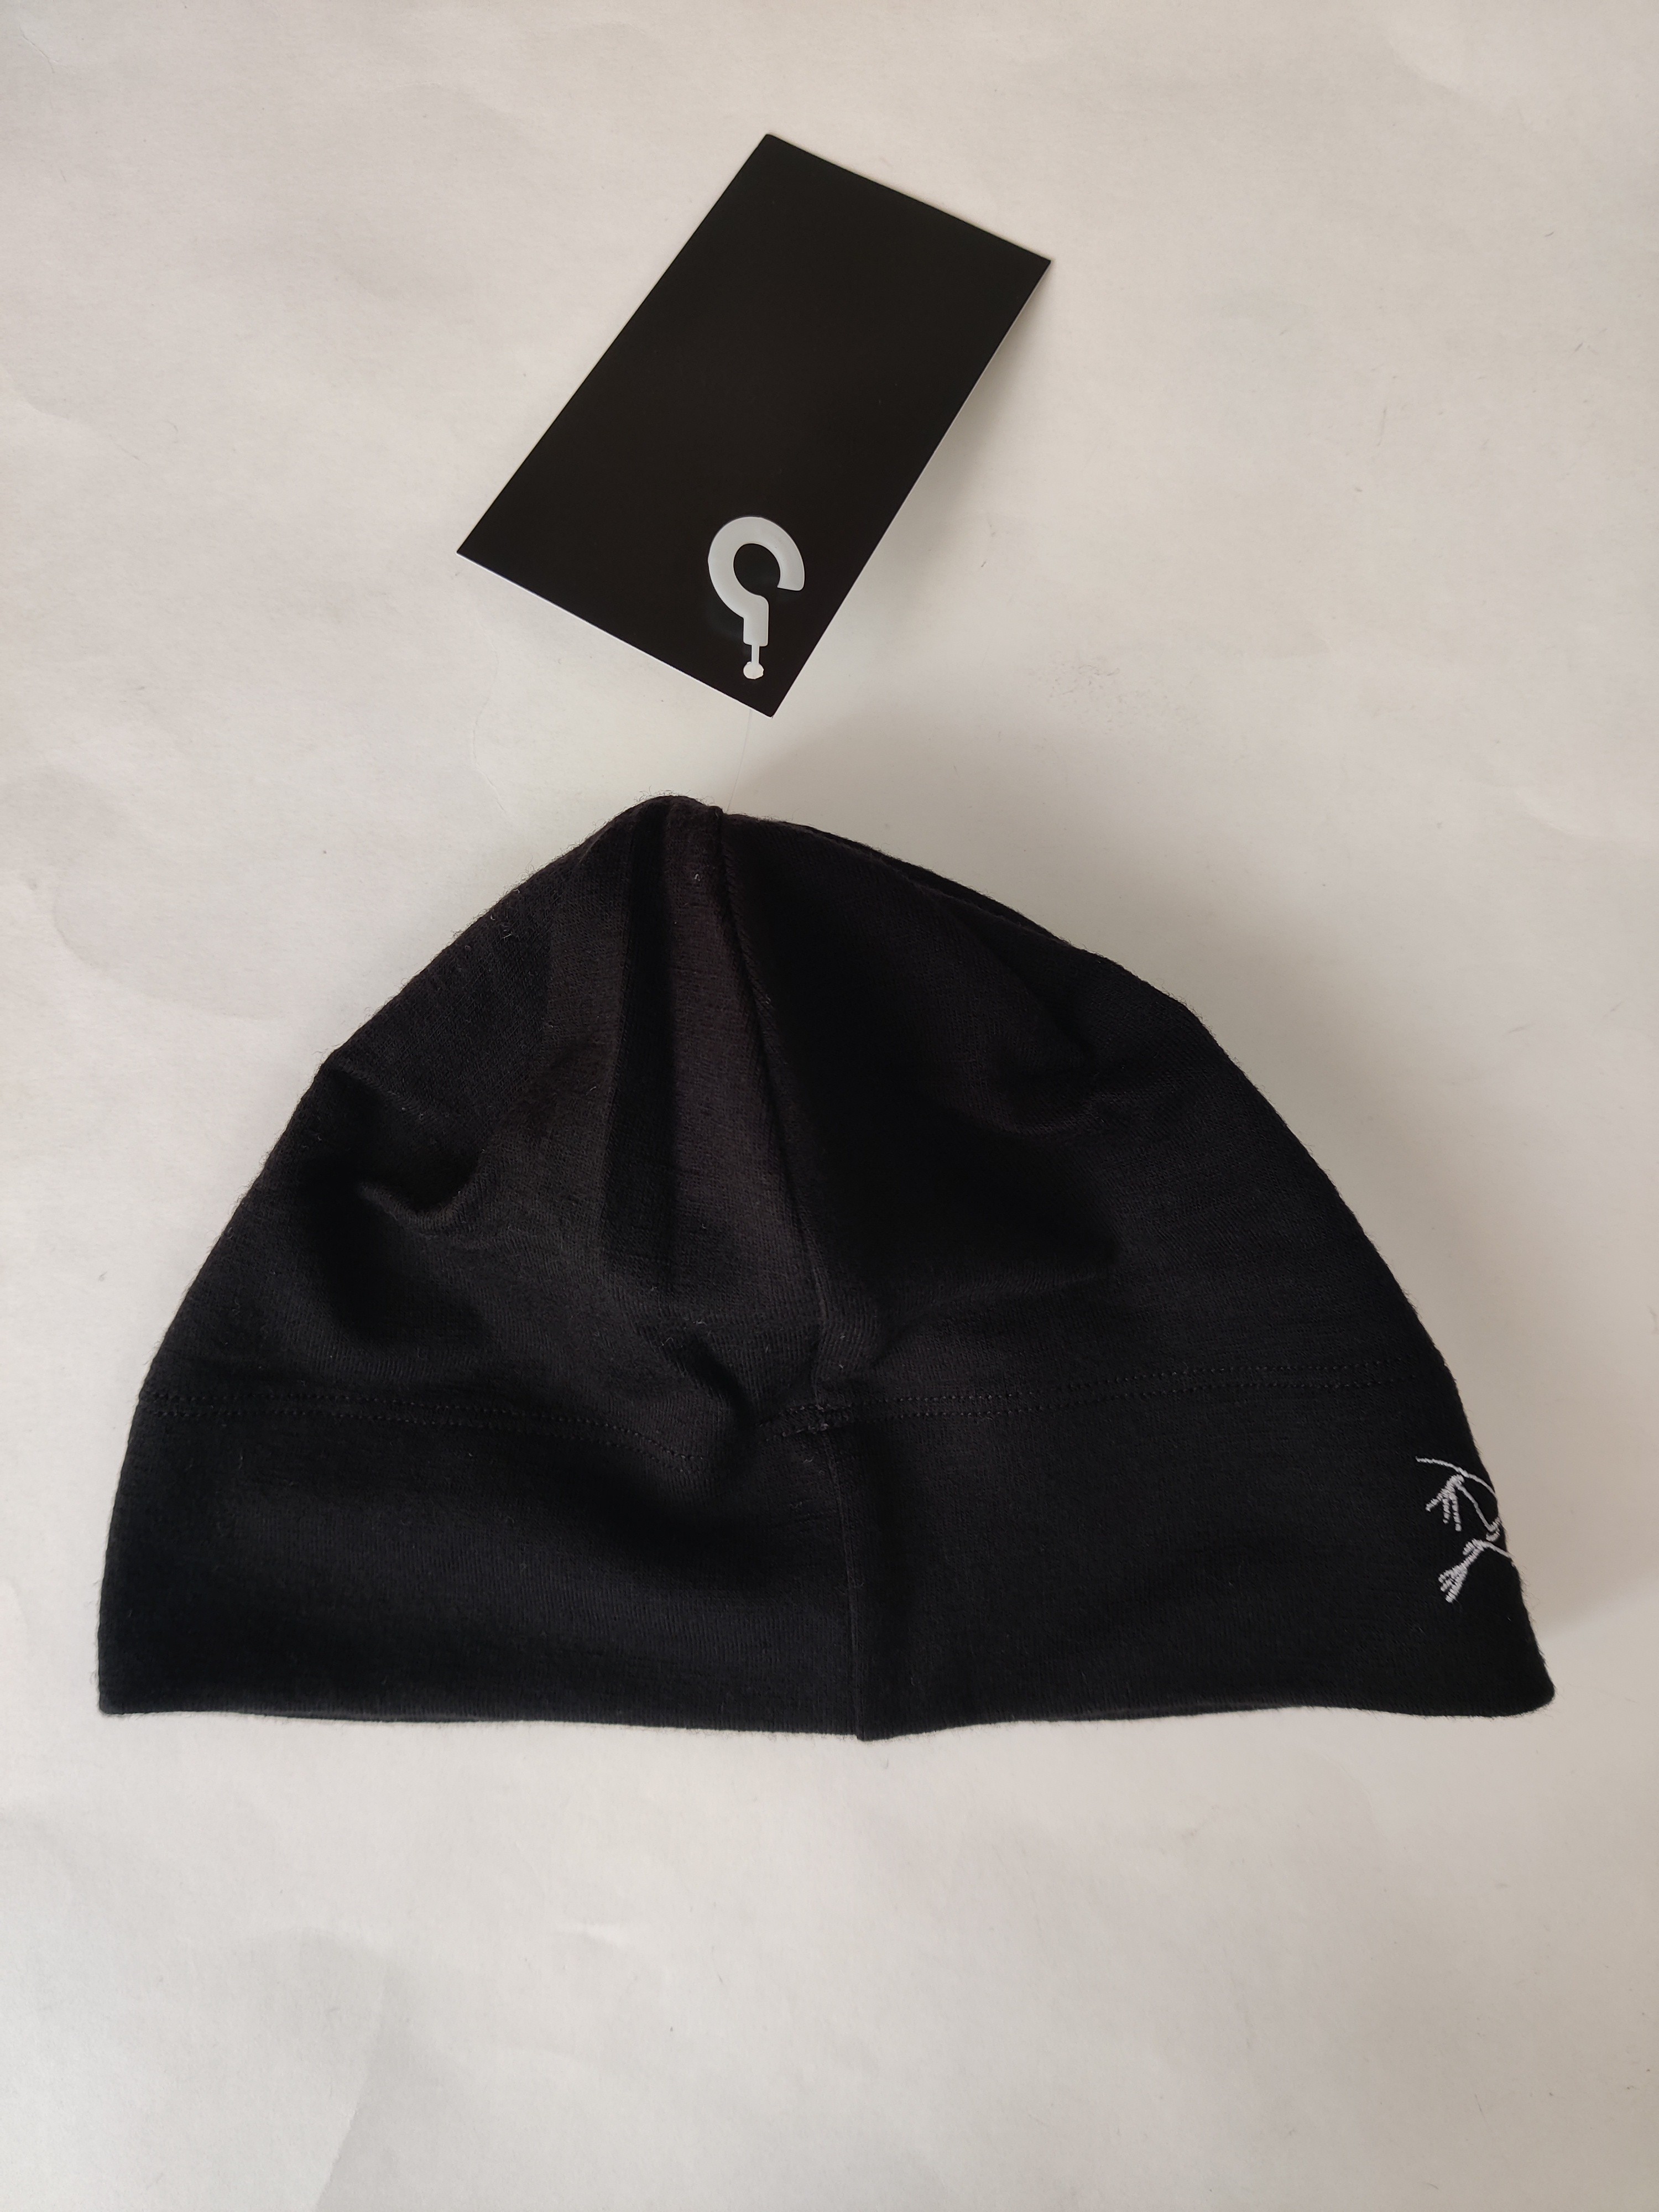 Rho LTW Merino Wool Beanie Thin Hat Winter Black Travel Outdoor Cap - 5